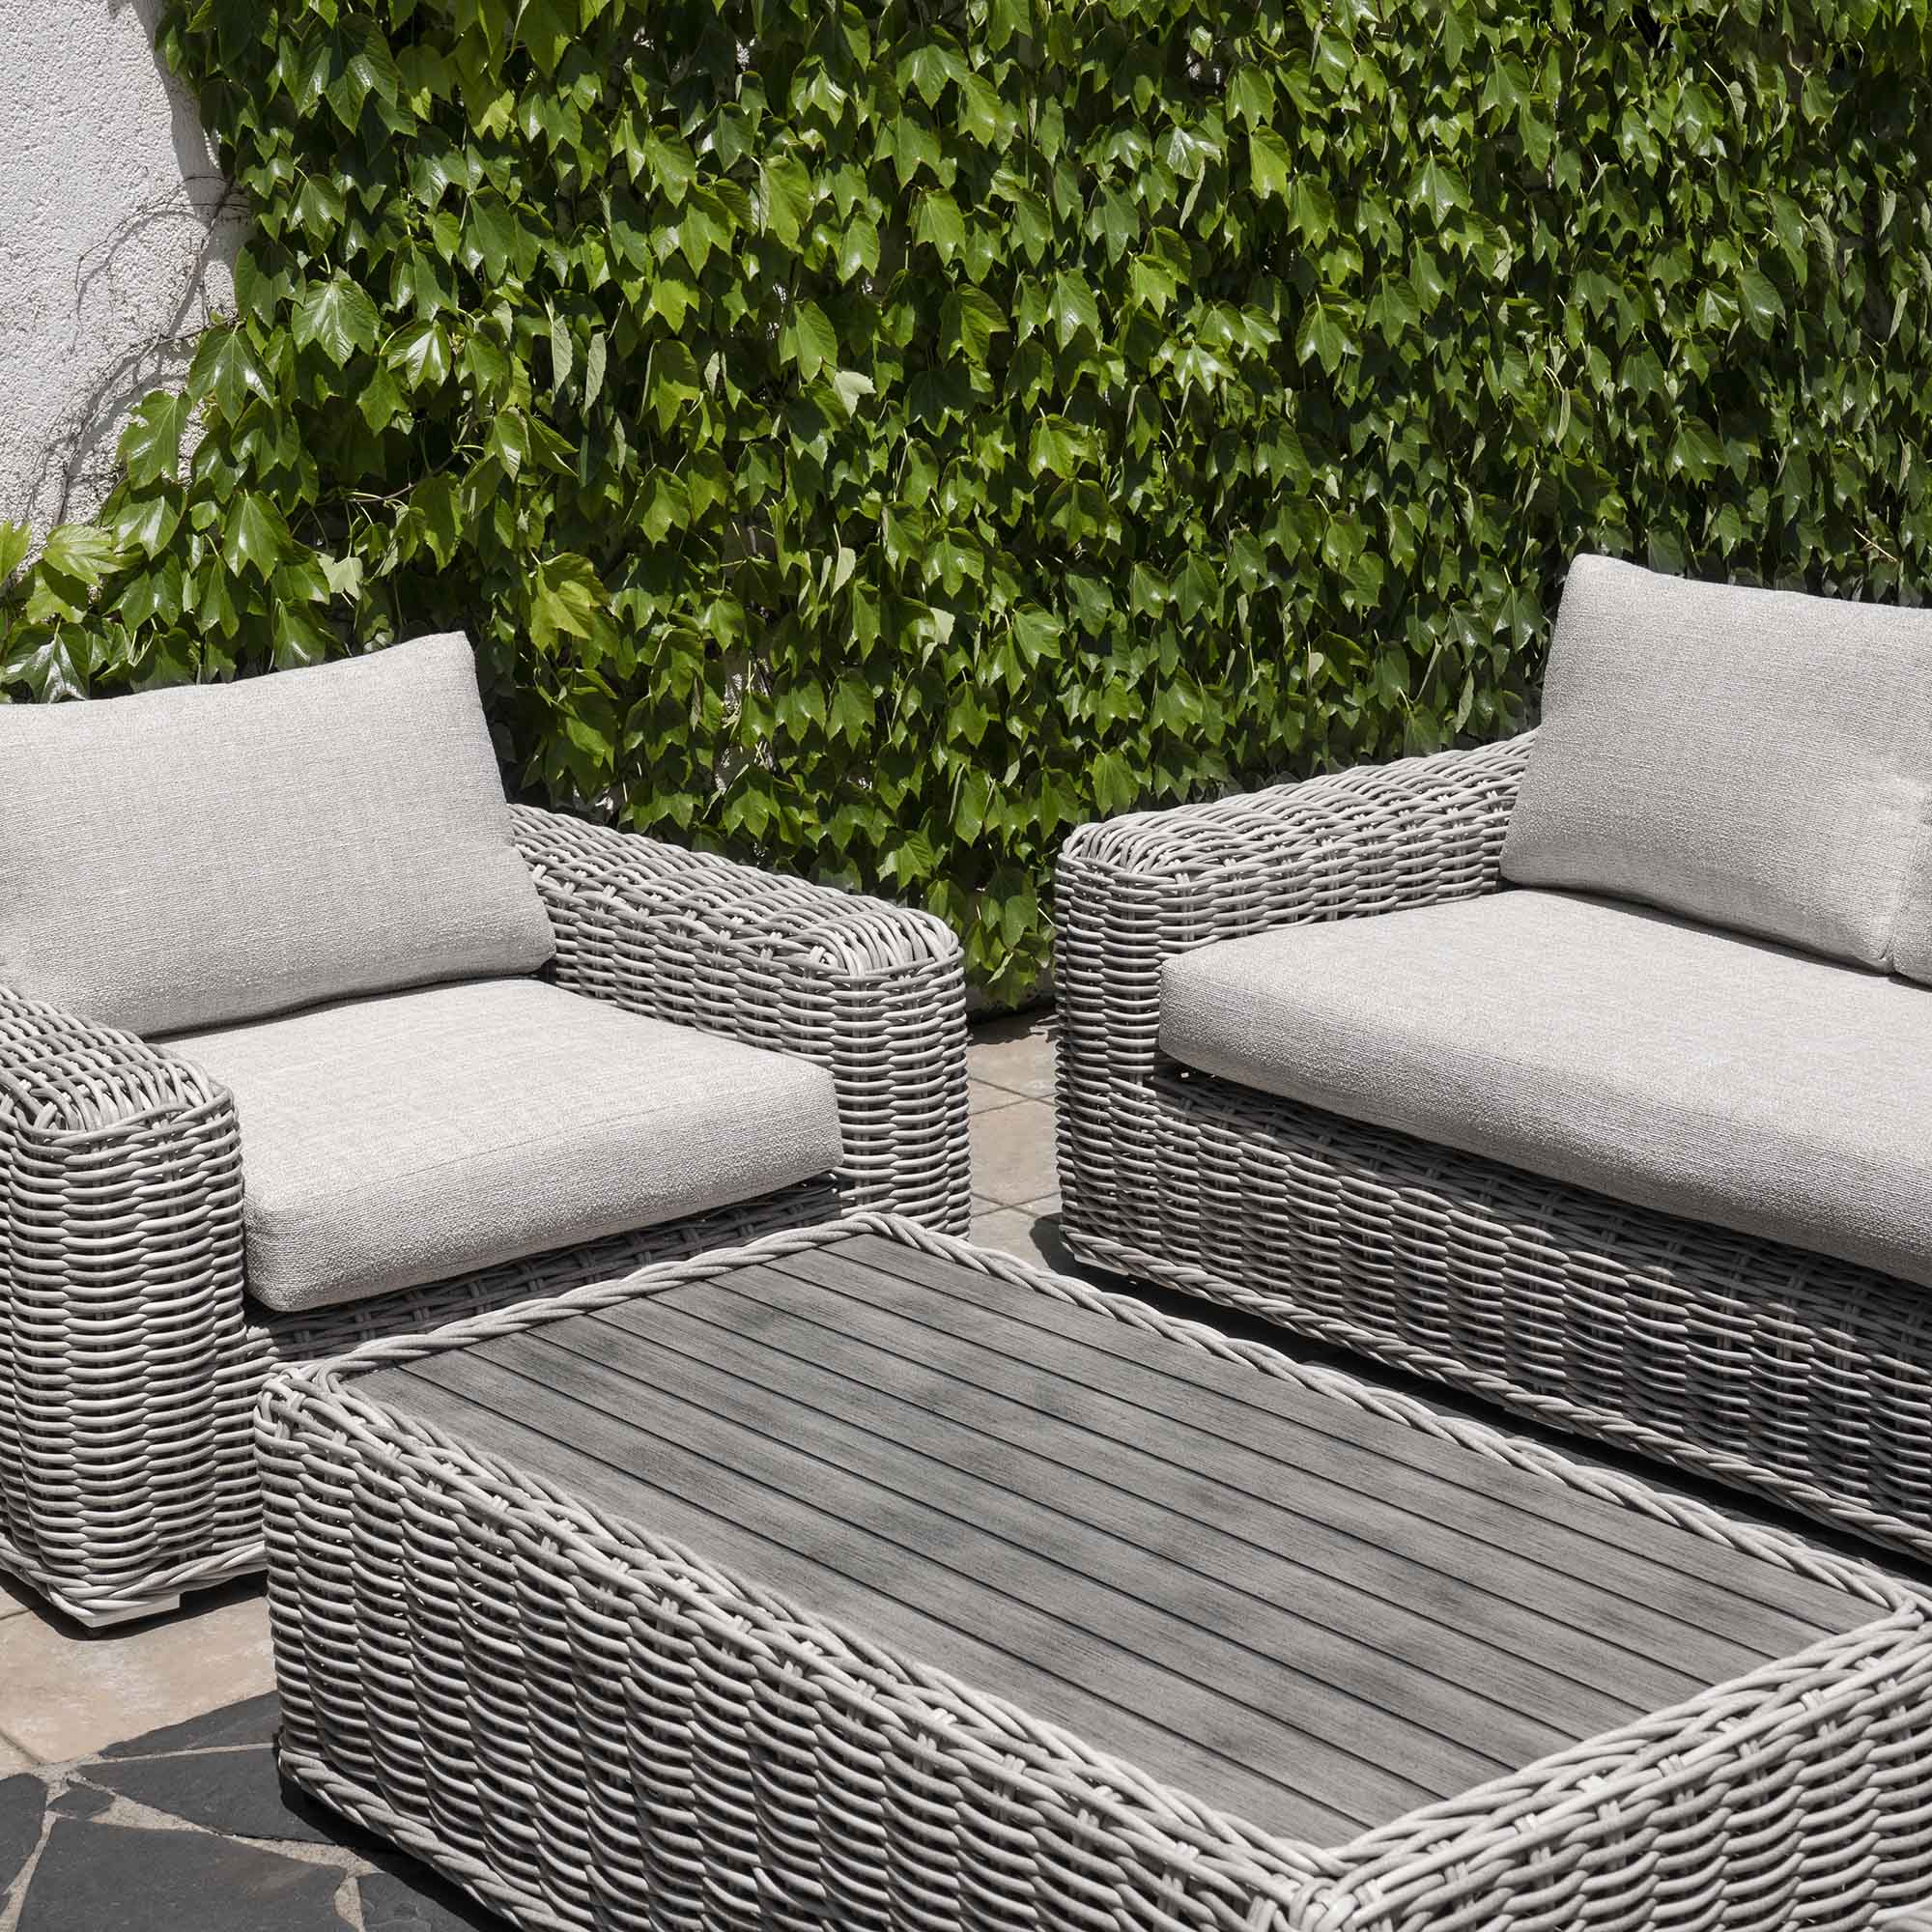 Bellagio Round Wicker Sofa Set with Coffee Table, Light Grey